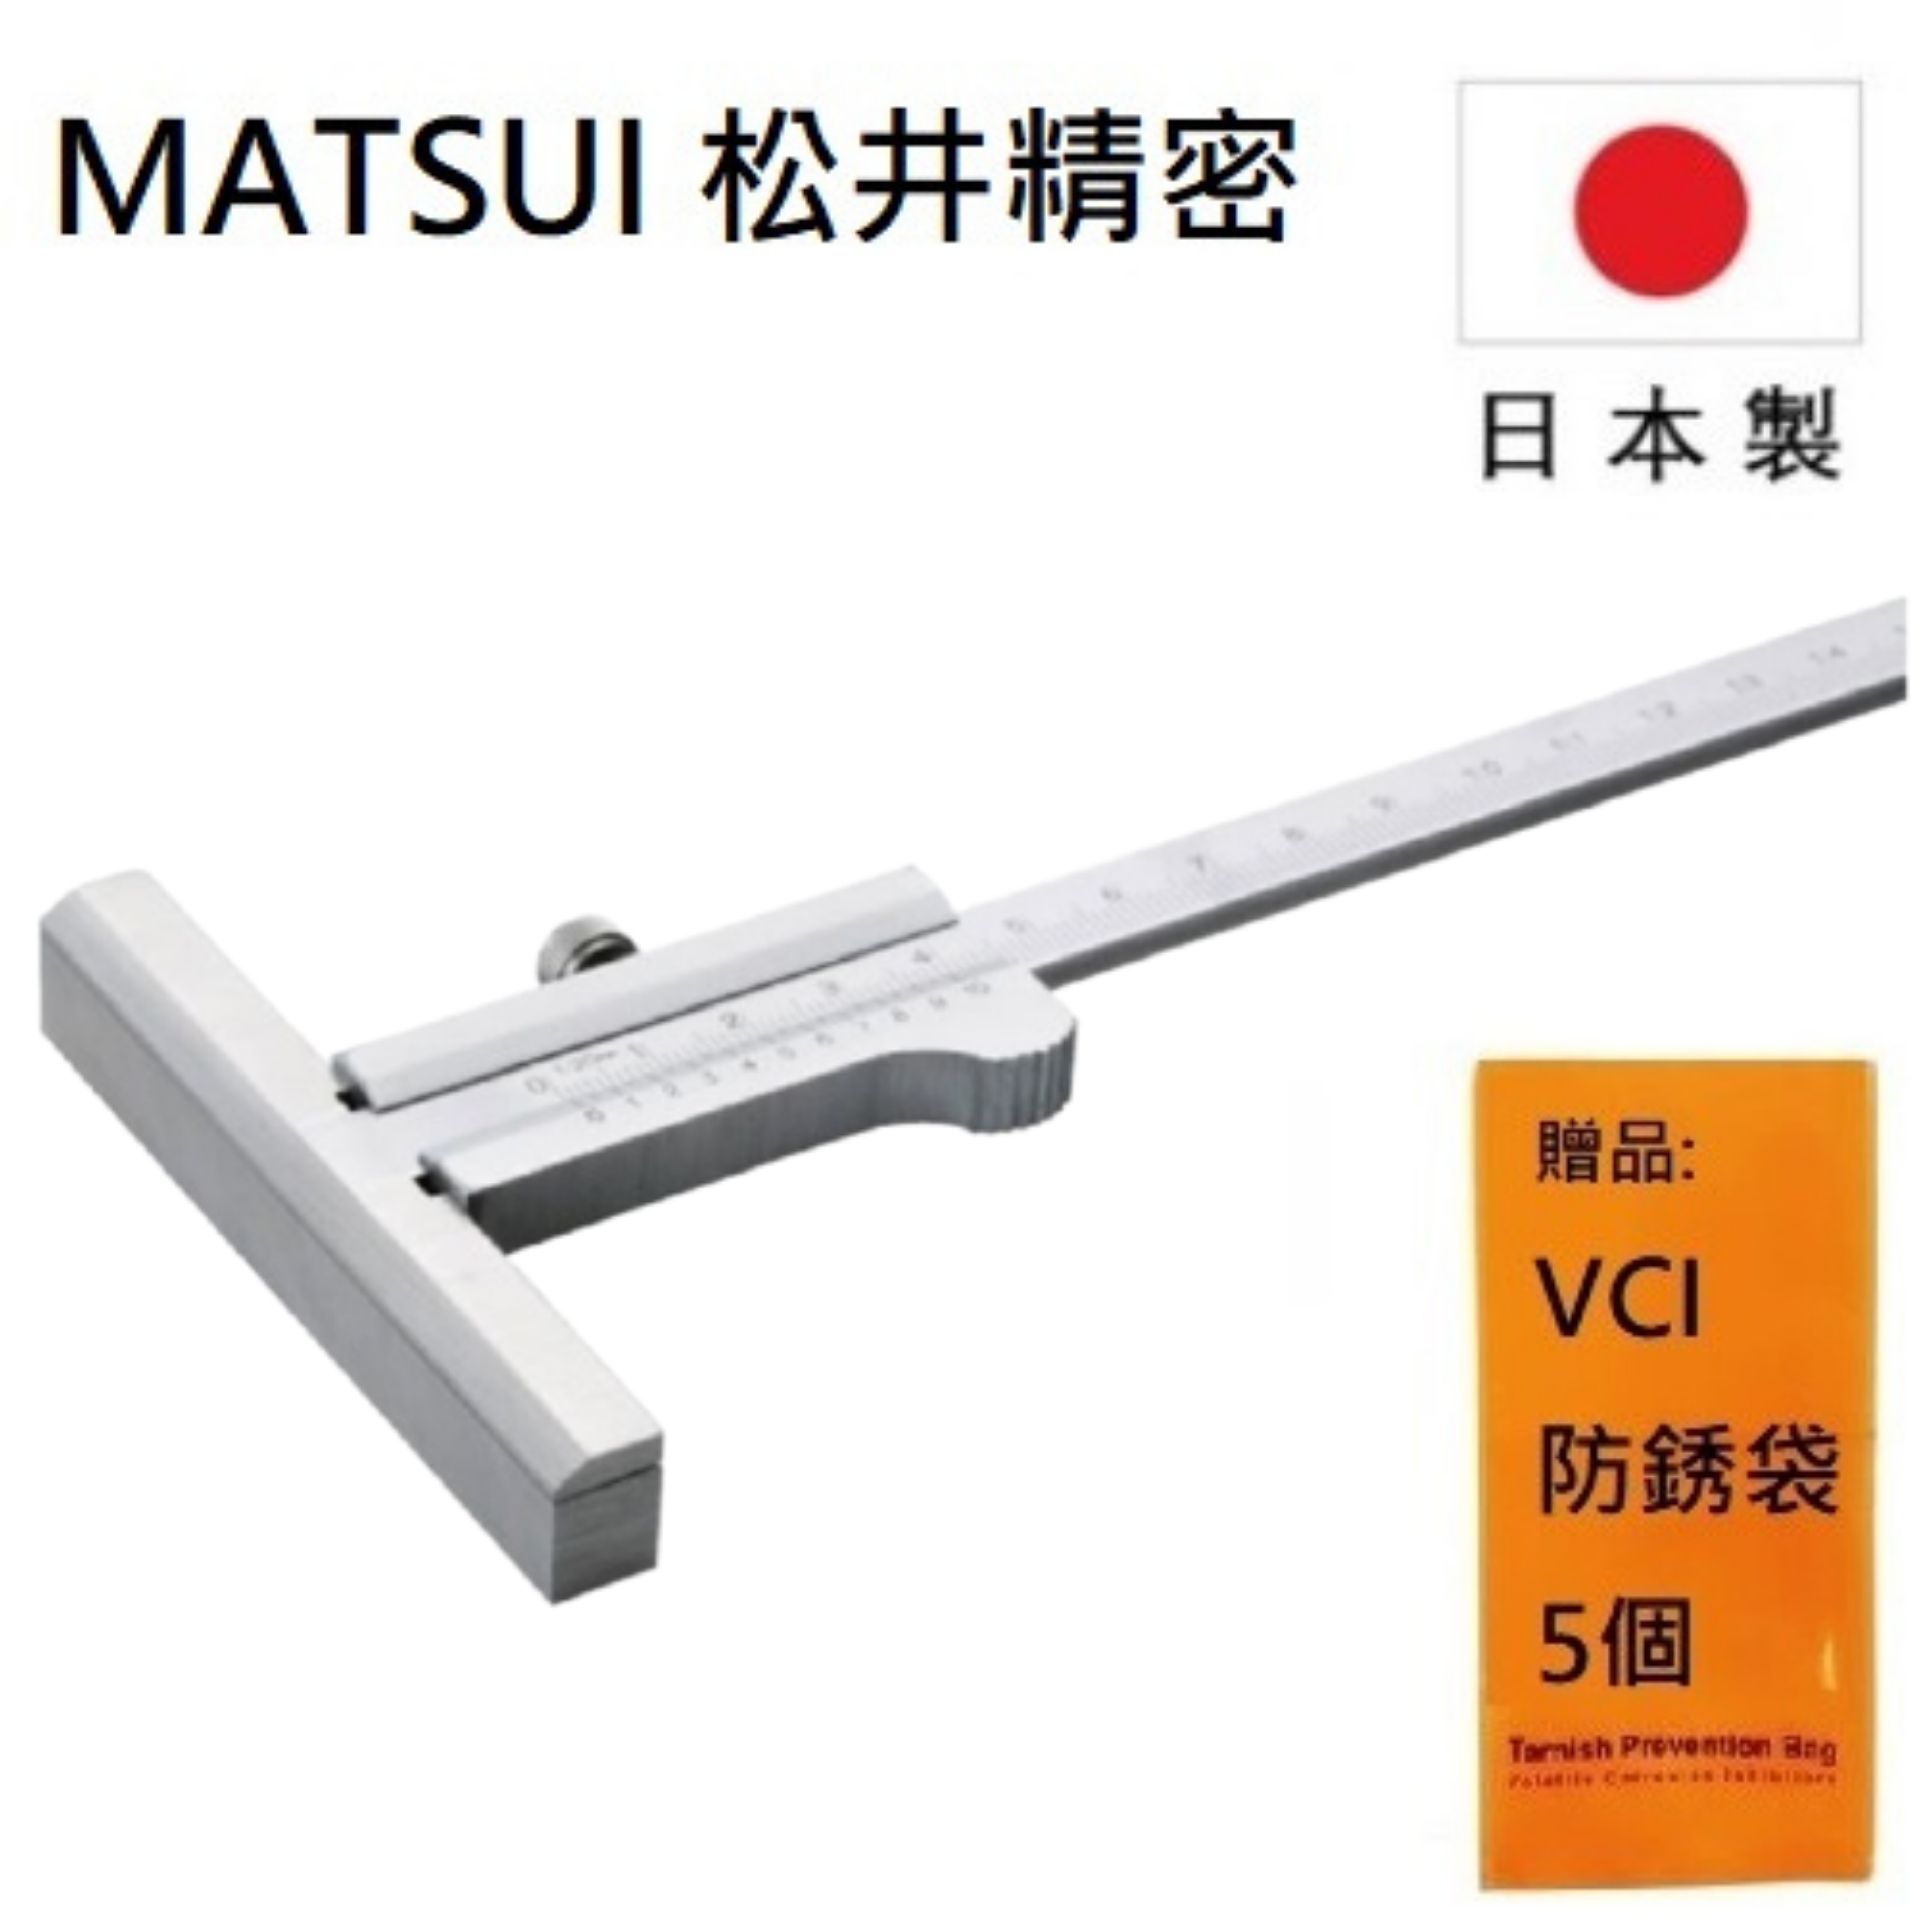 【MATSUI 松井精密】厚 T型游標卡尺 200mm(厚11mm), C1-20 日本製造